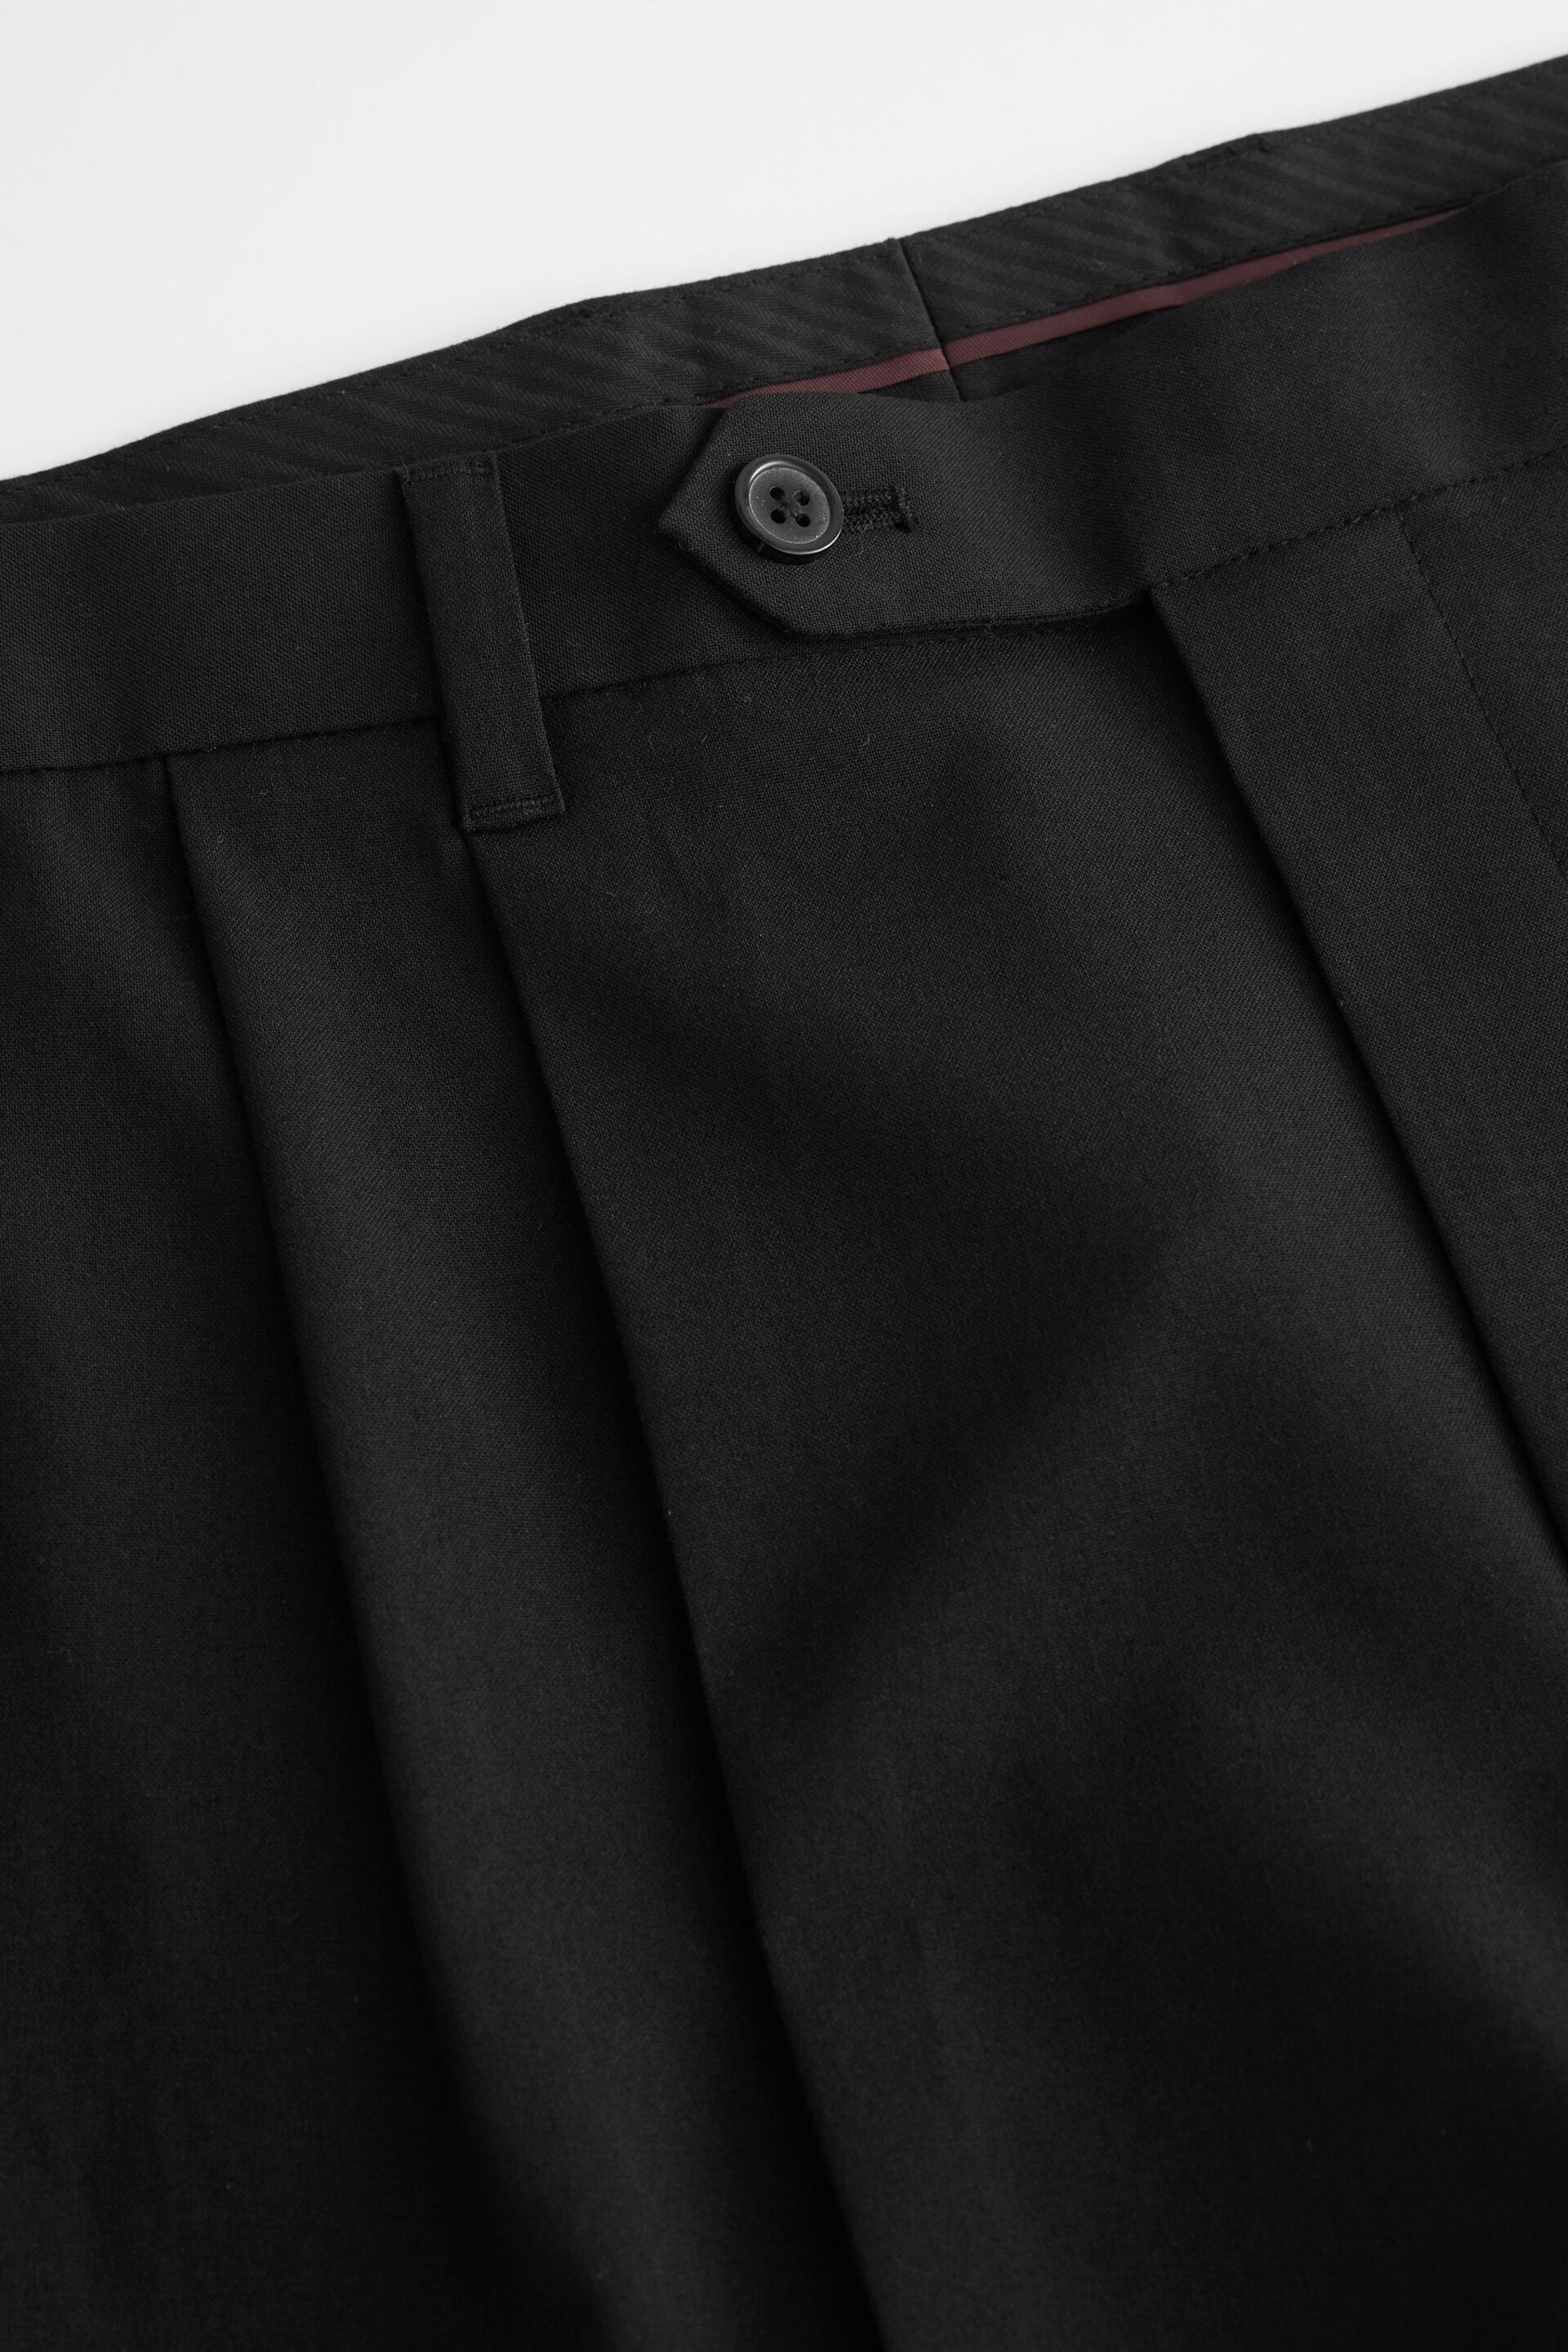 Black Slim Signature Tollegno Wool Suit: Trousers - Image 3 of 5